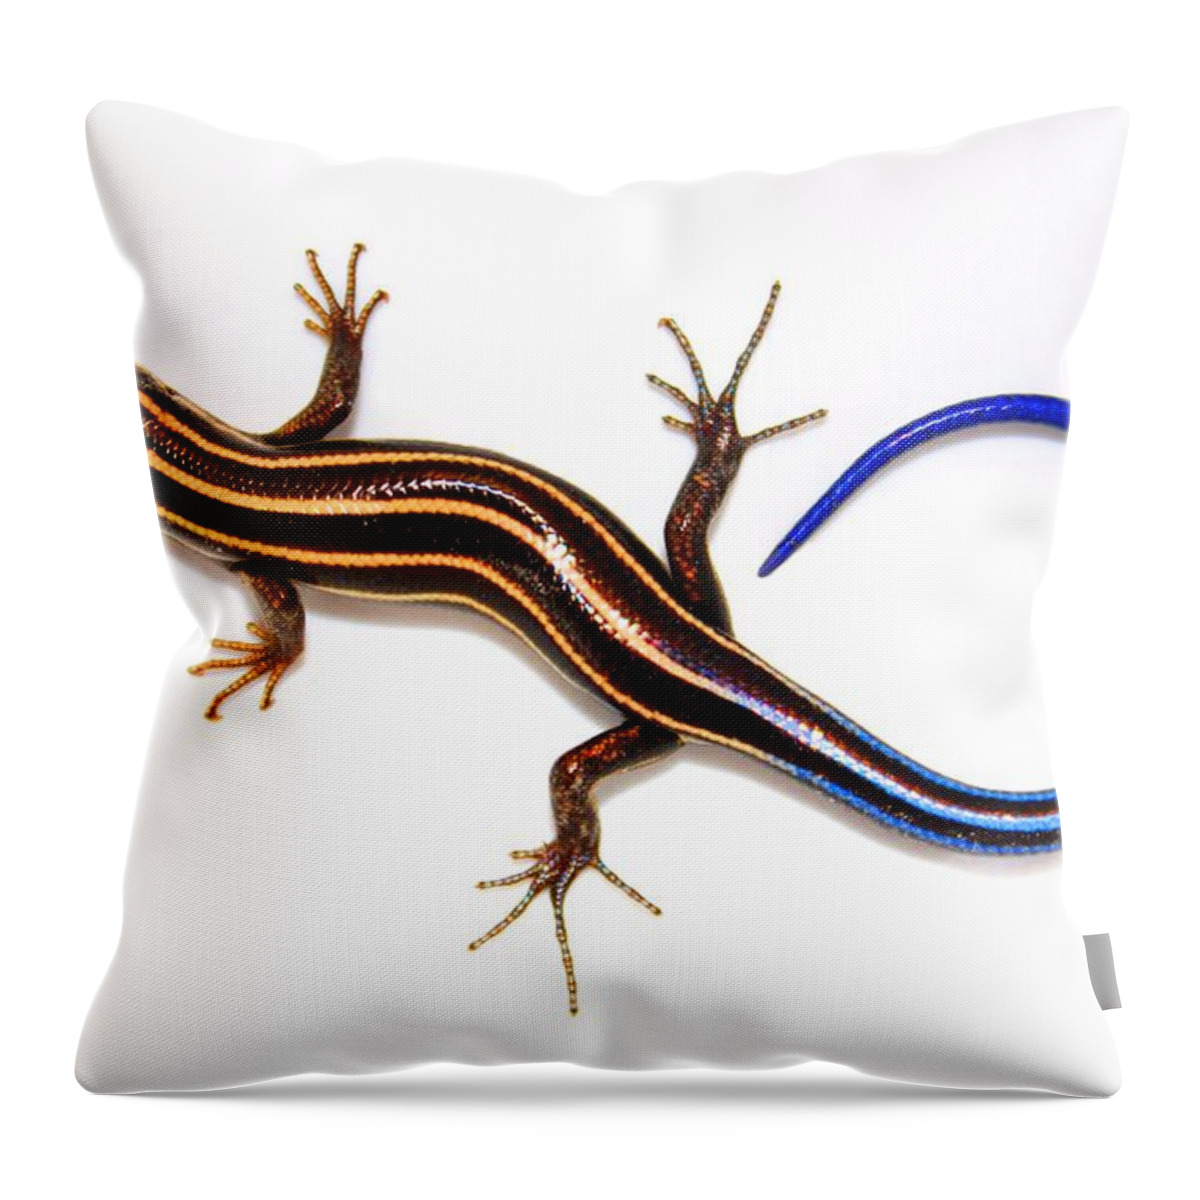 Landscape Throw Pillow featuring the photograph Blue Lizard by Morgan Carter